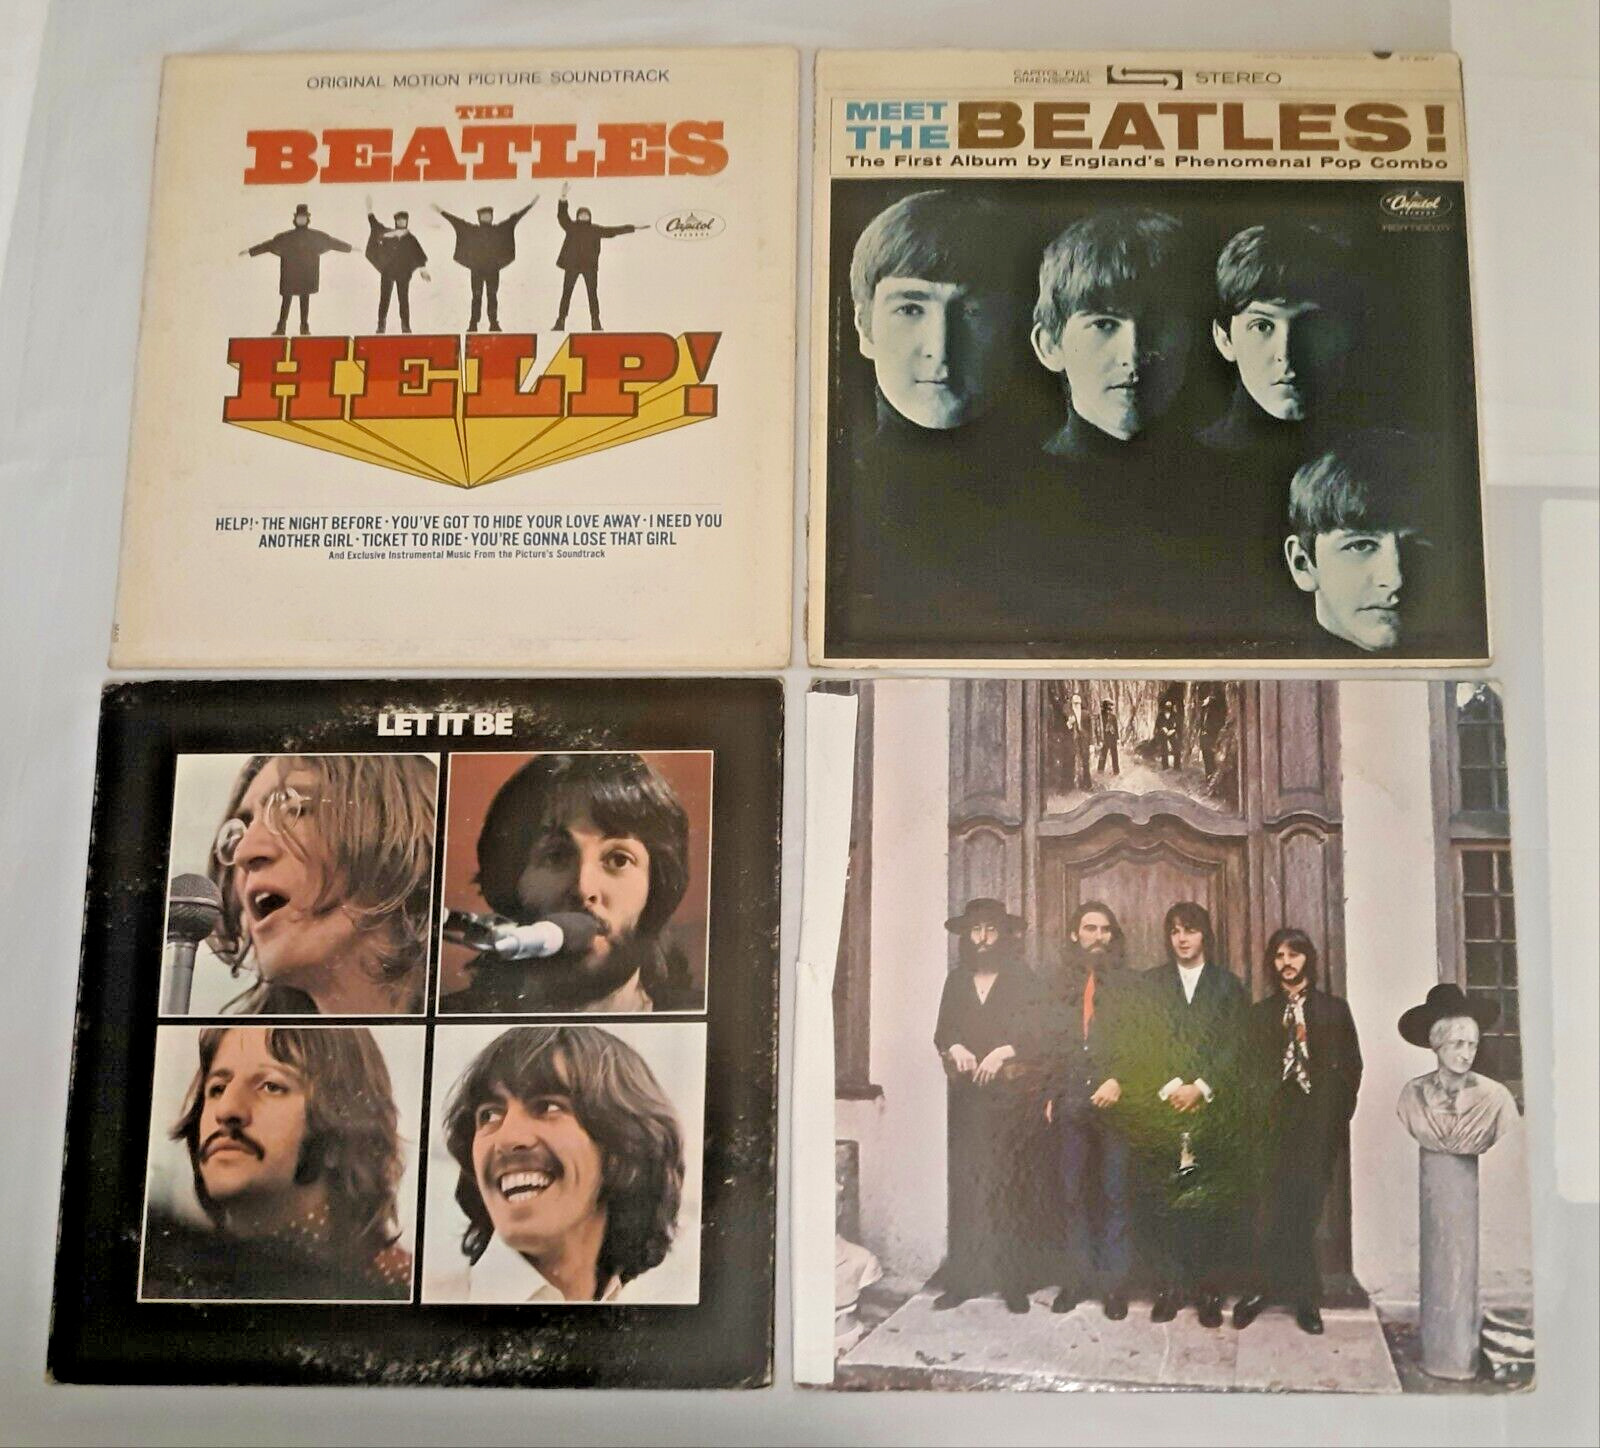 The Beatles Vinyl Used Record Lot Let it Be Help Beatles Again Meet The Beatles